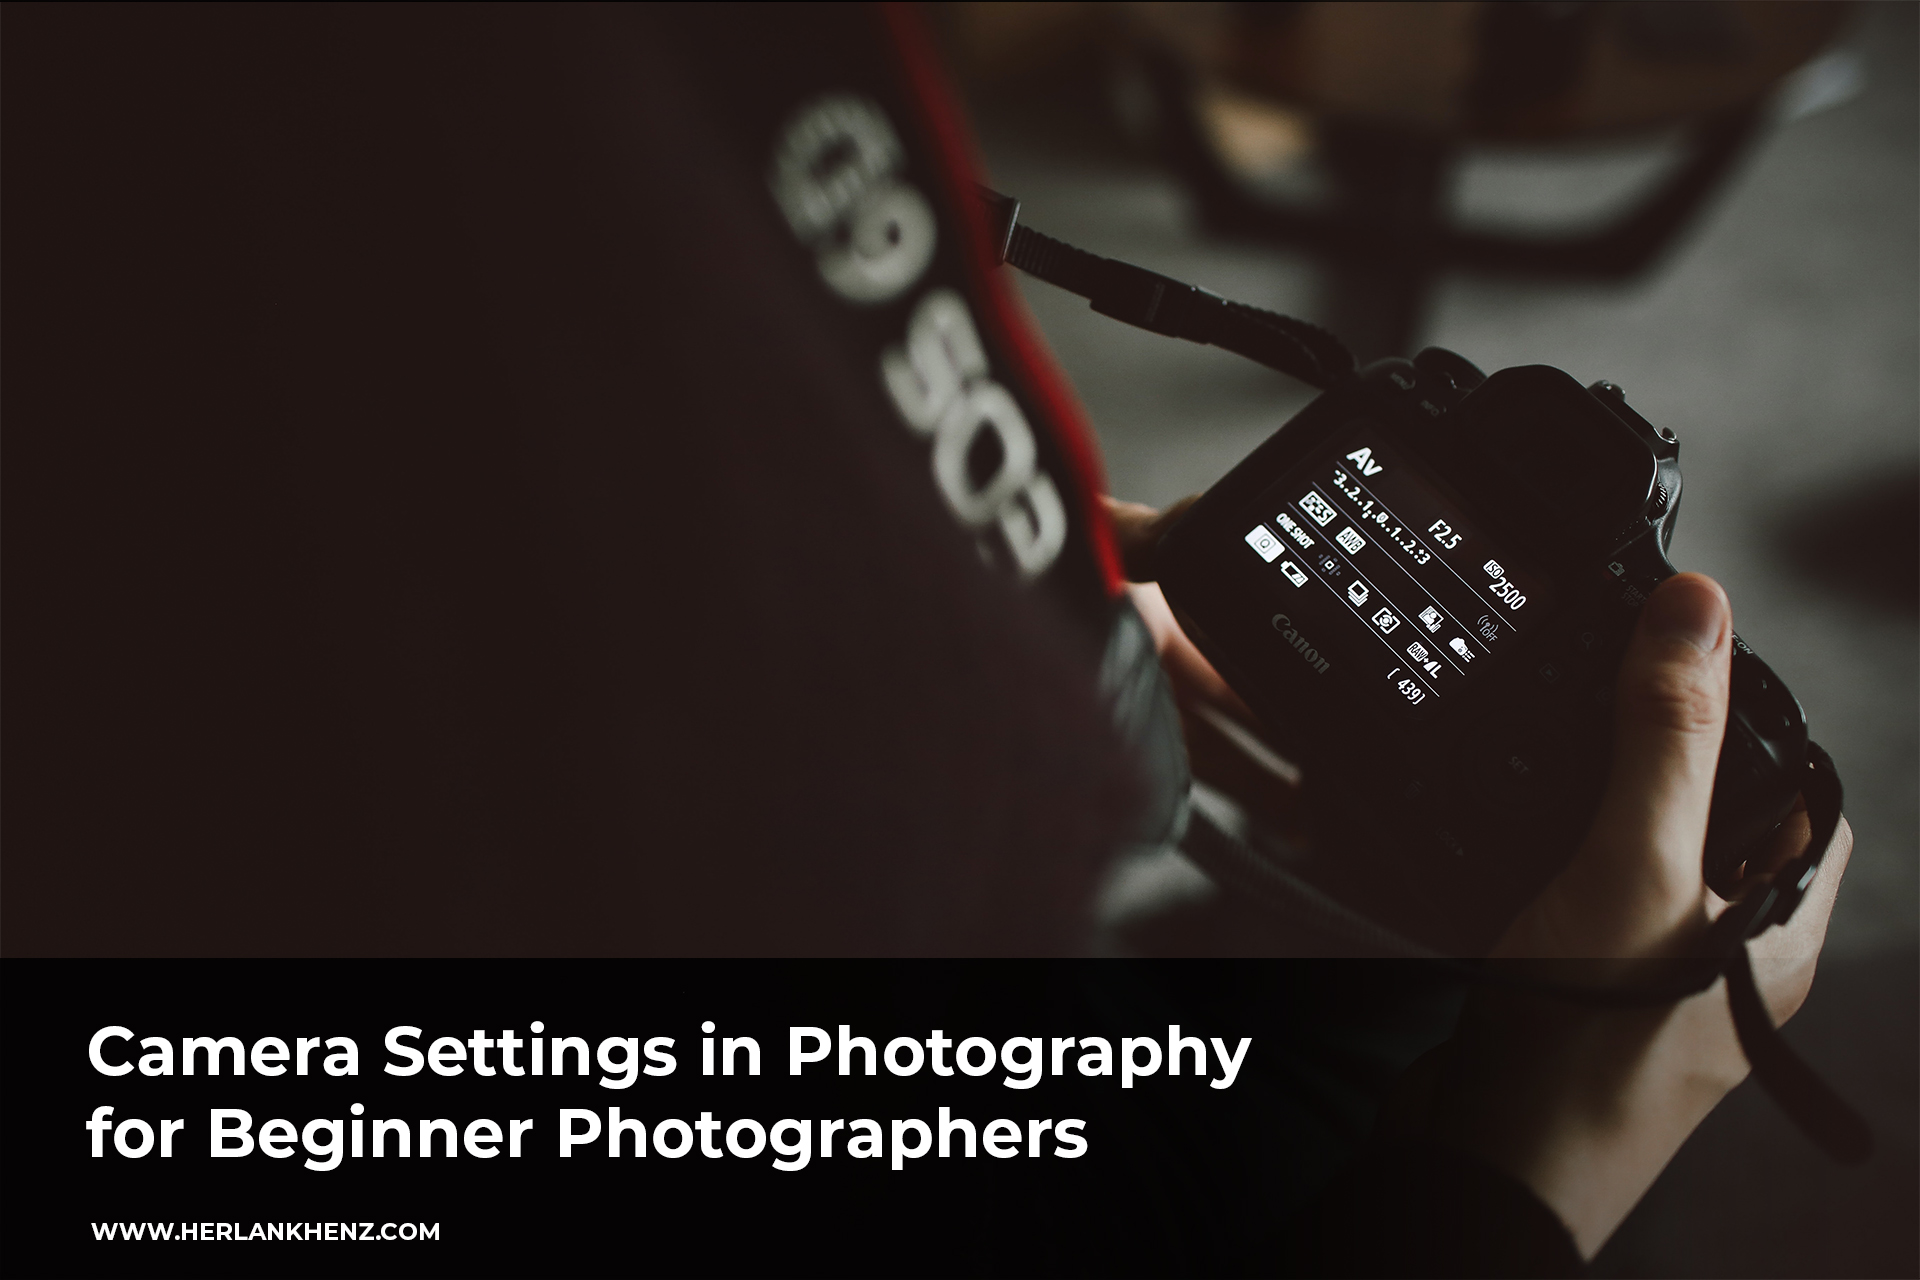 Pengaturan Kamera Dalam Fotografi untuk Fotografer Pemula